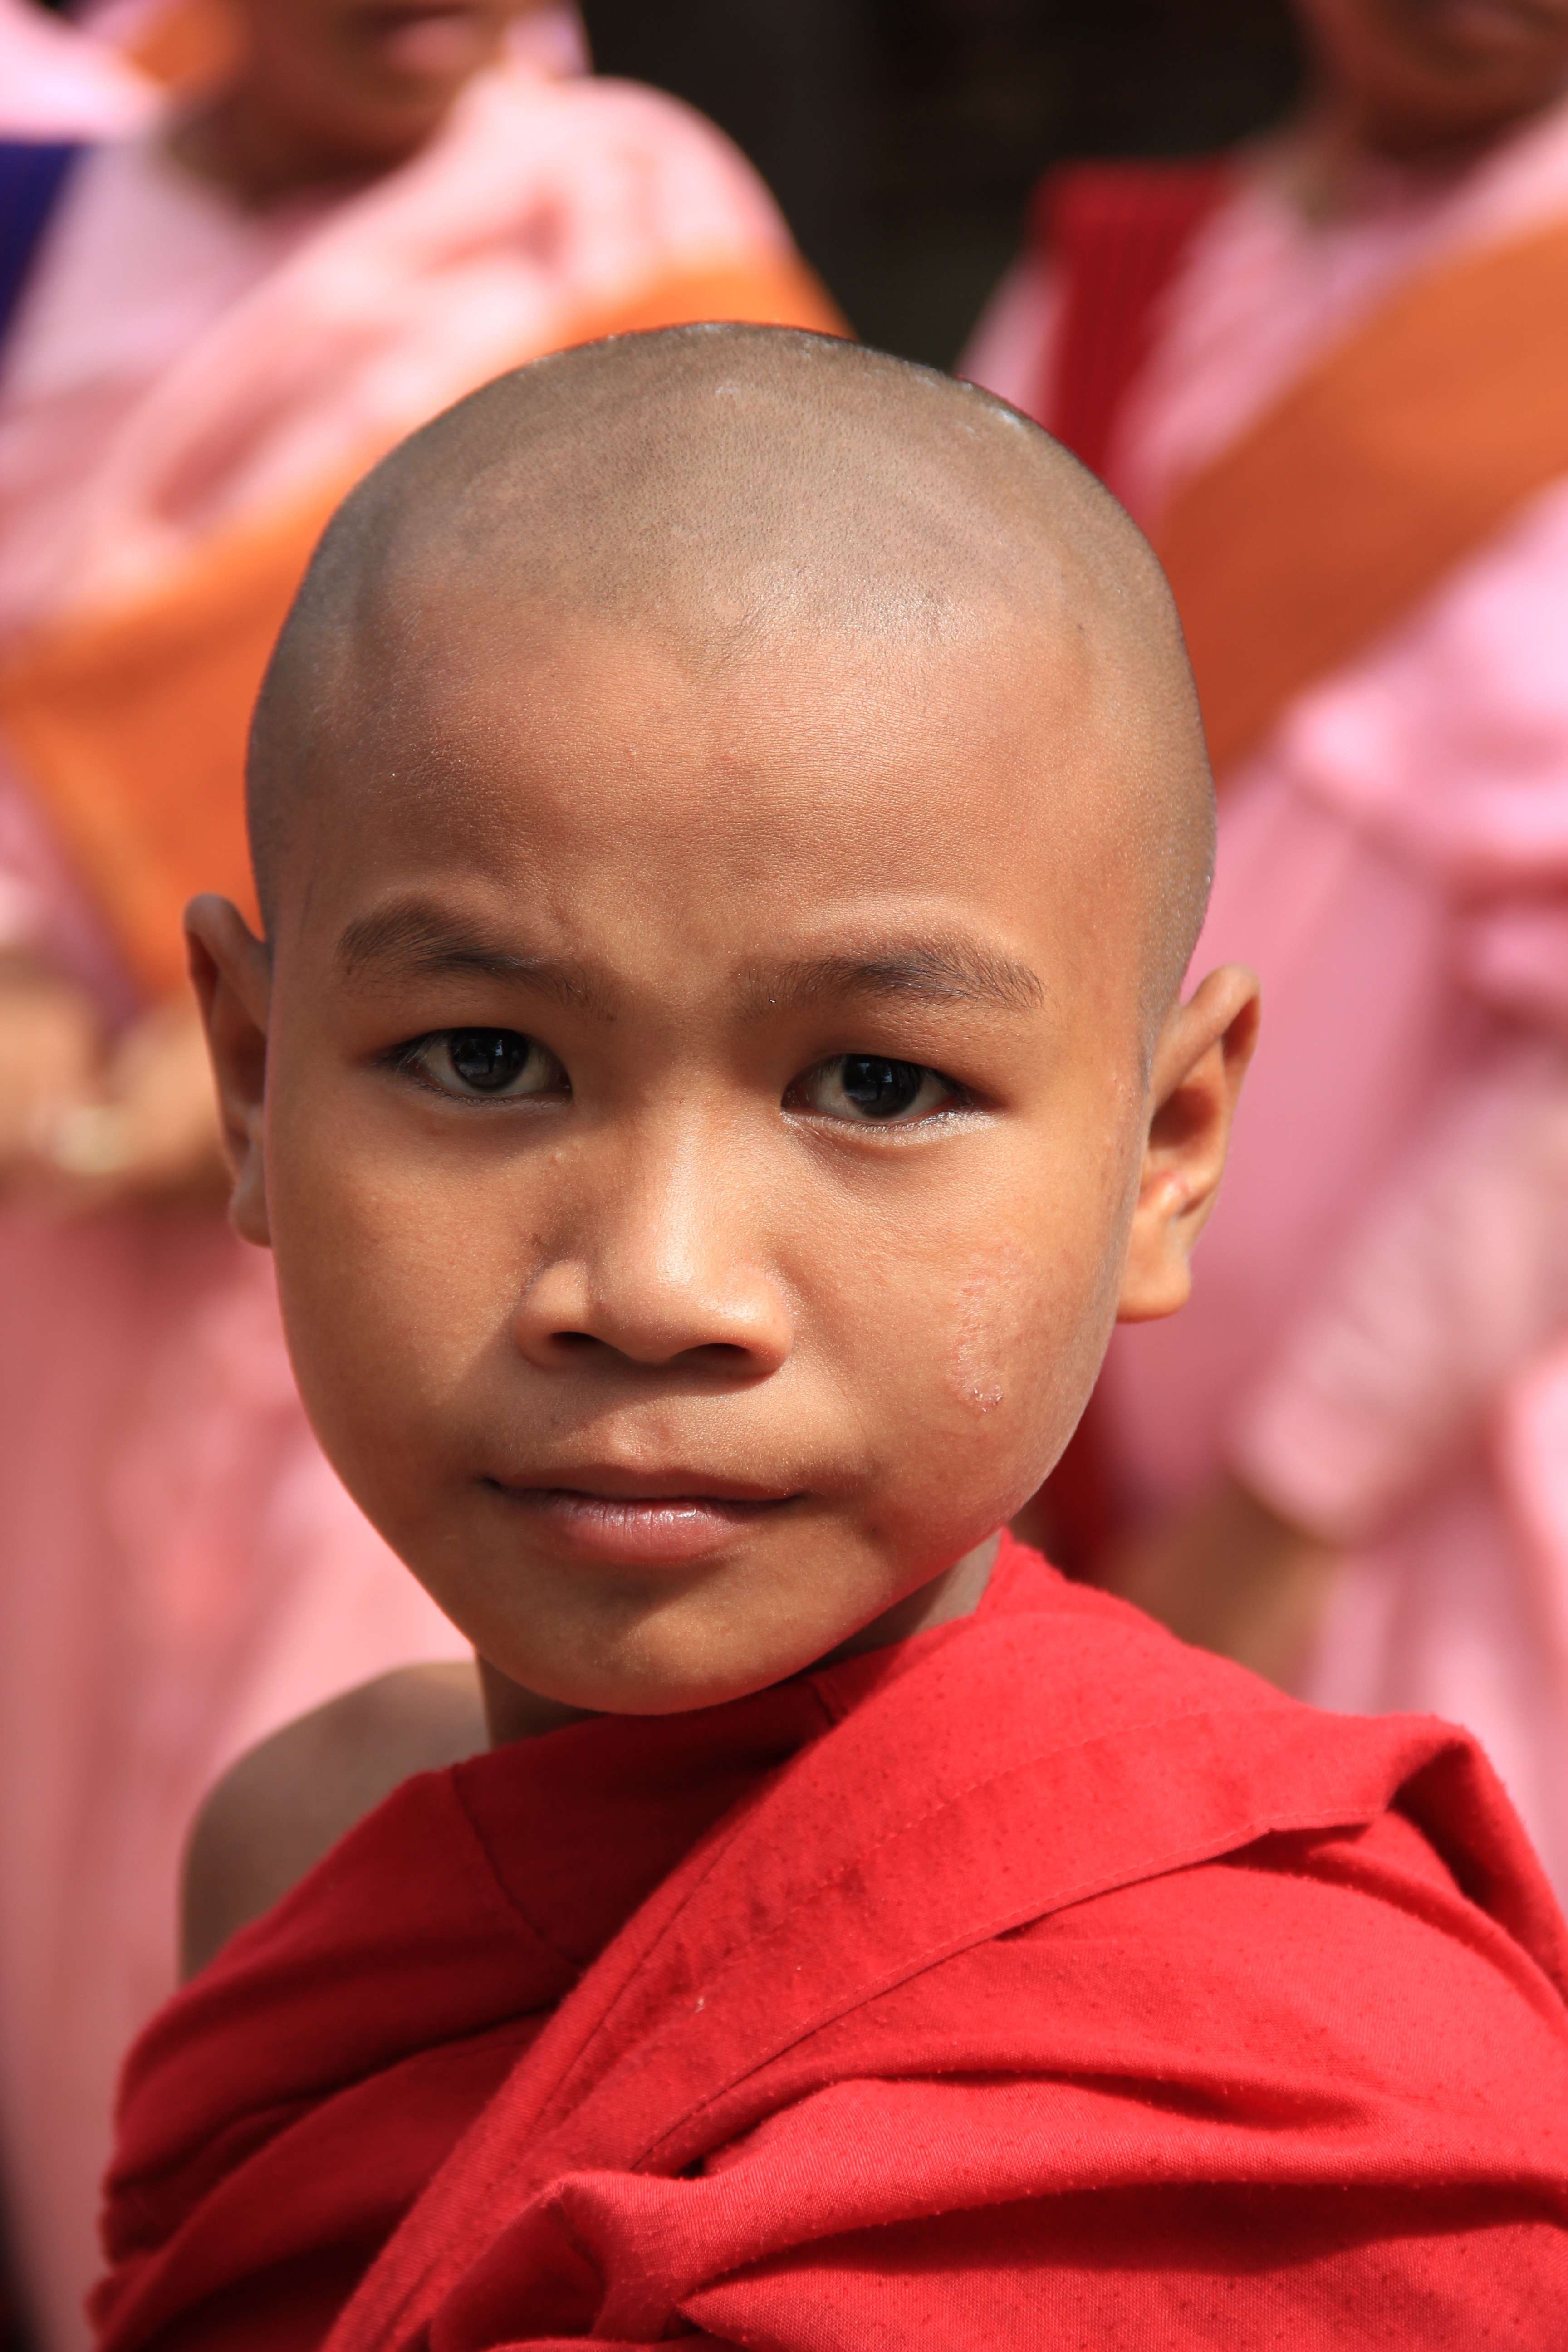 Christian-Buddhist Consultation in Myanmar